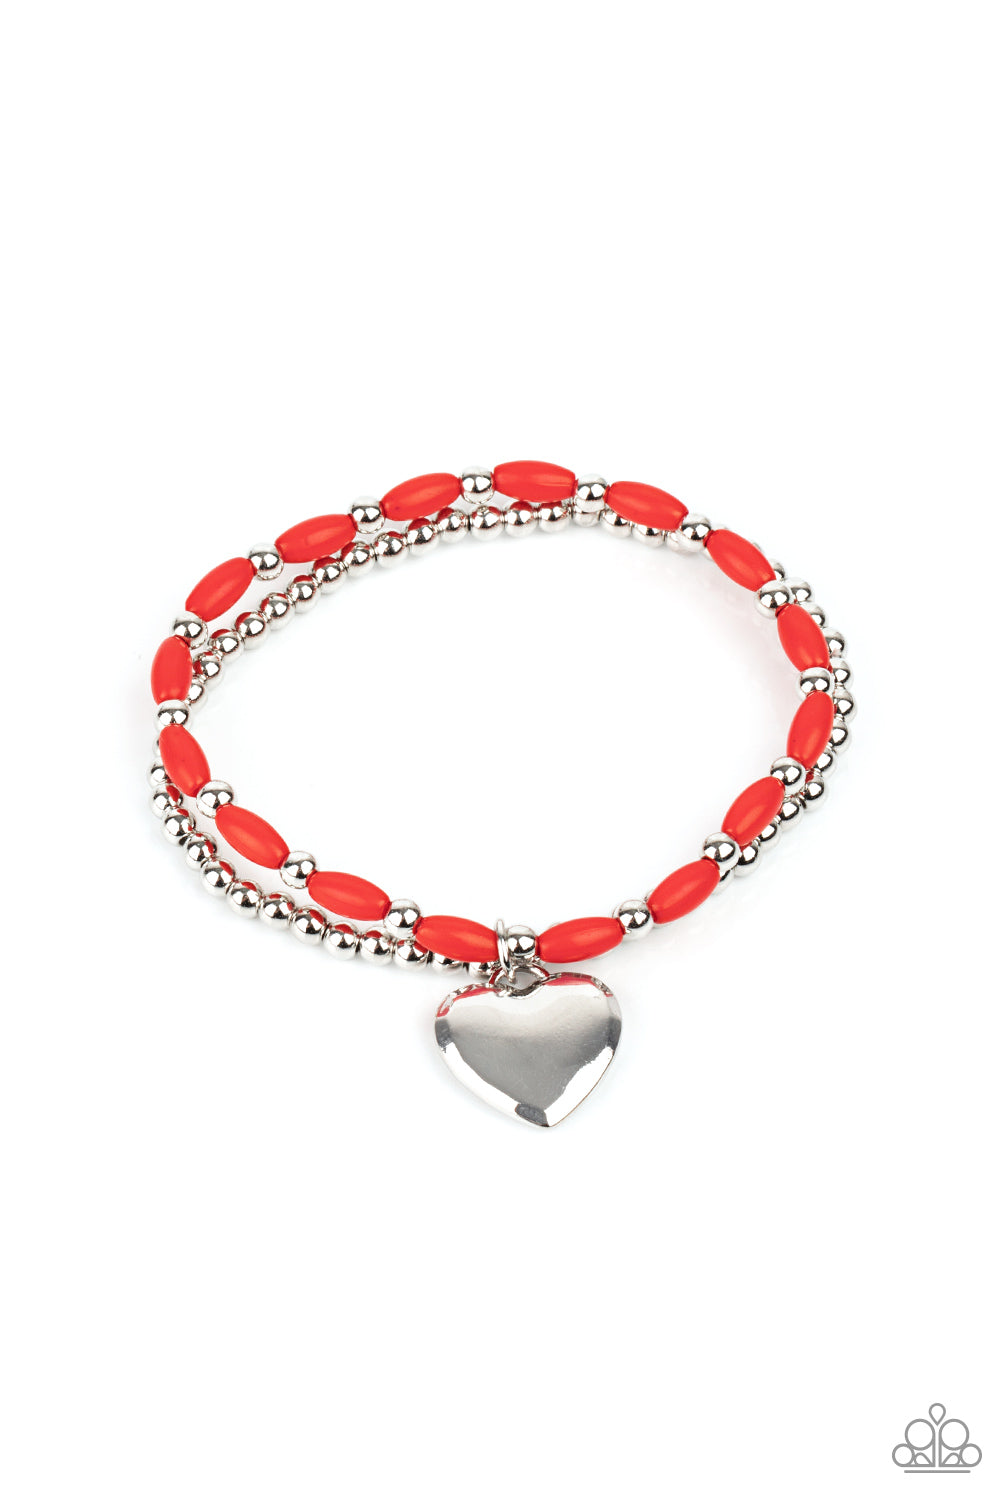 Paparazzi - Candy Gram - Red - Stretchy Band Bracelet